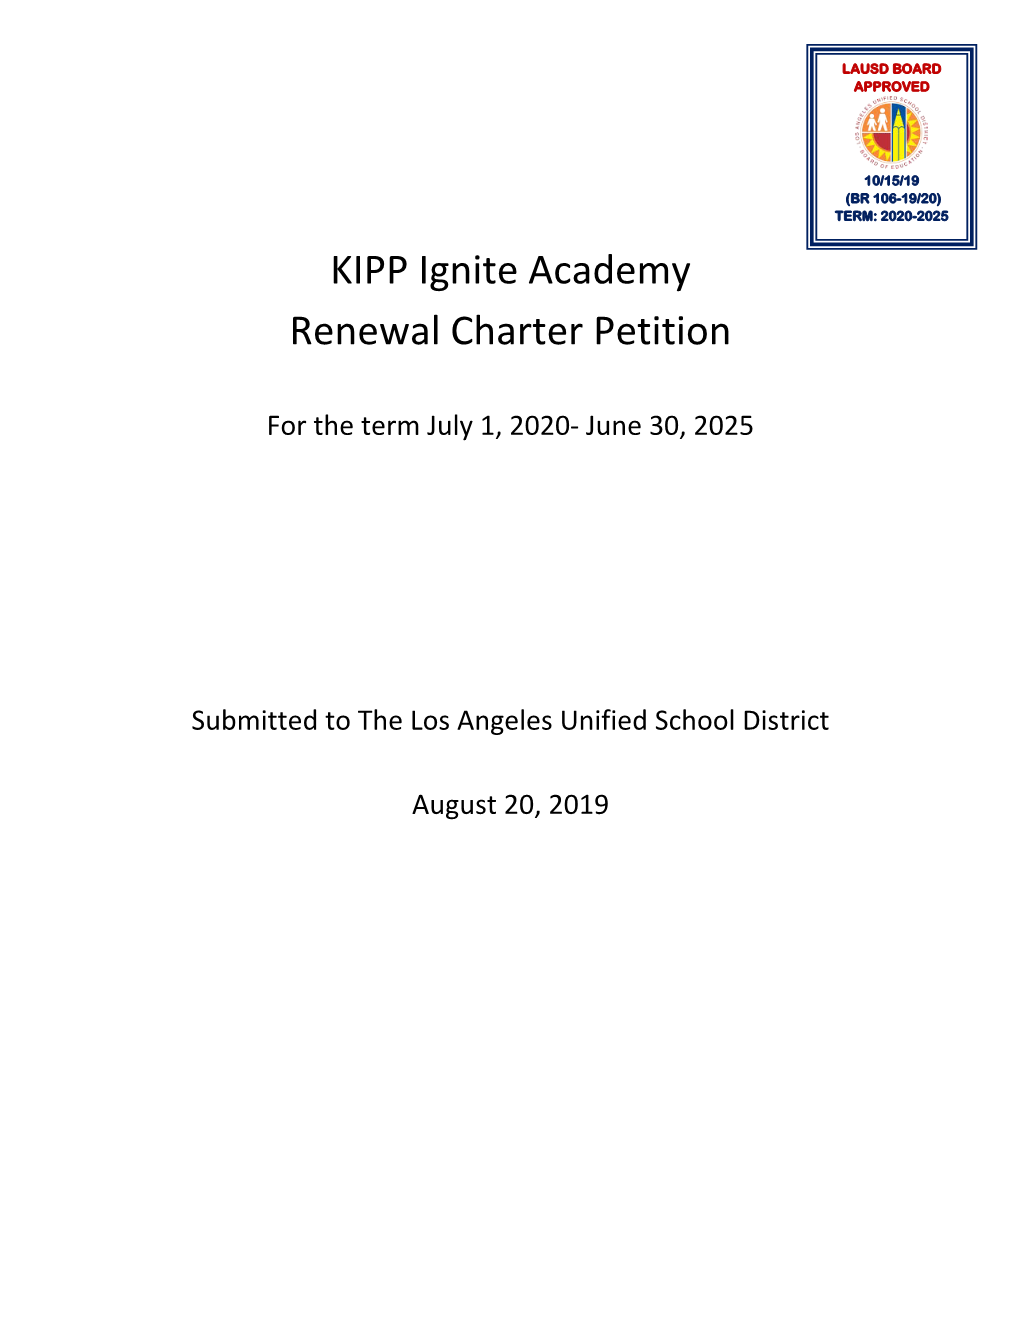 KIPP Ignite Academy Renewal Charter Petition